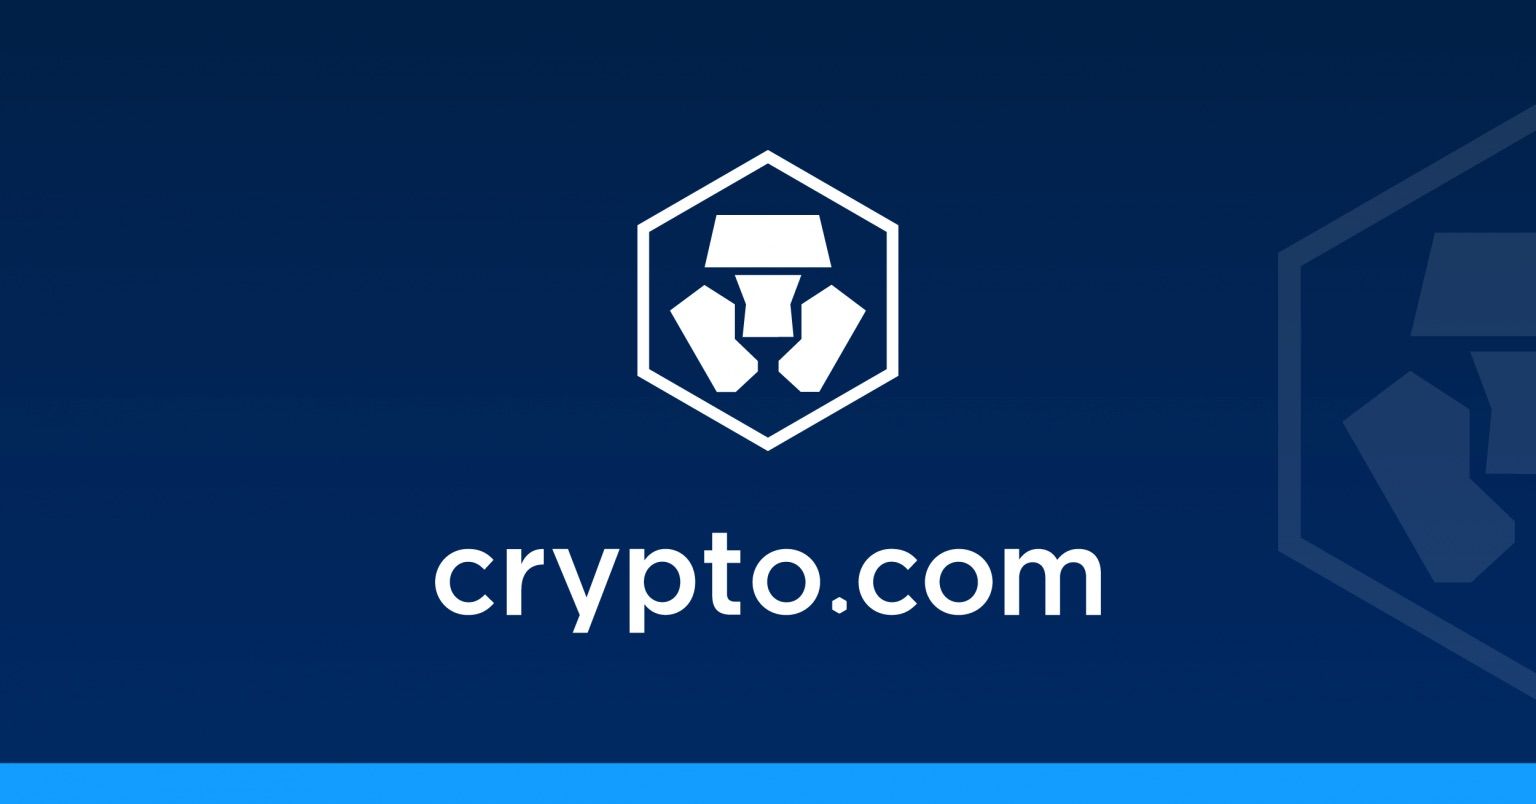 Internxt partners with Crypto.com